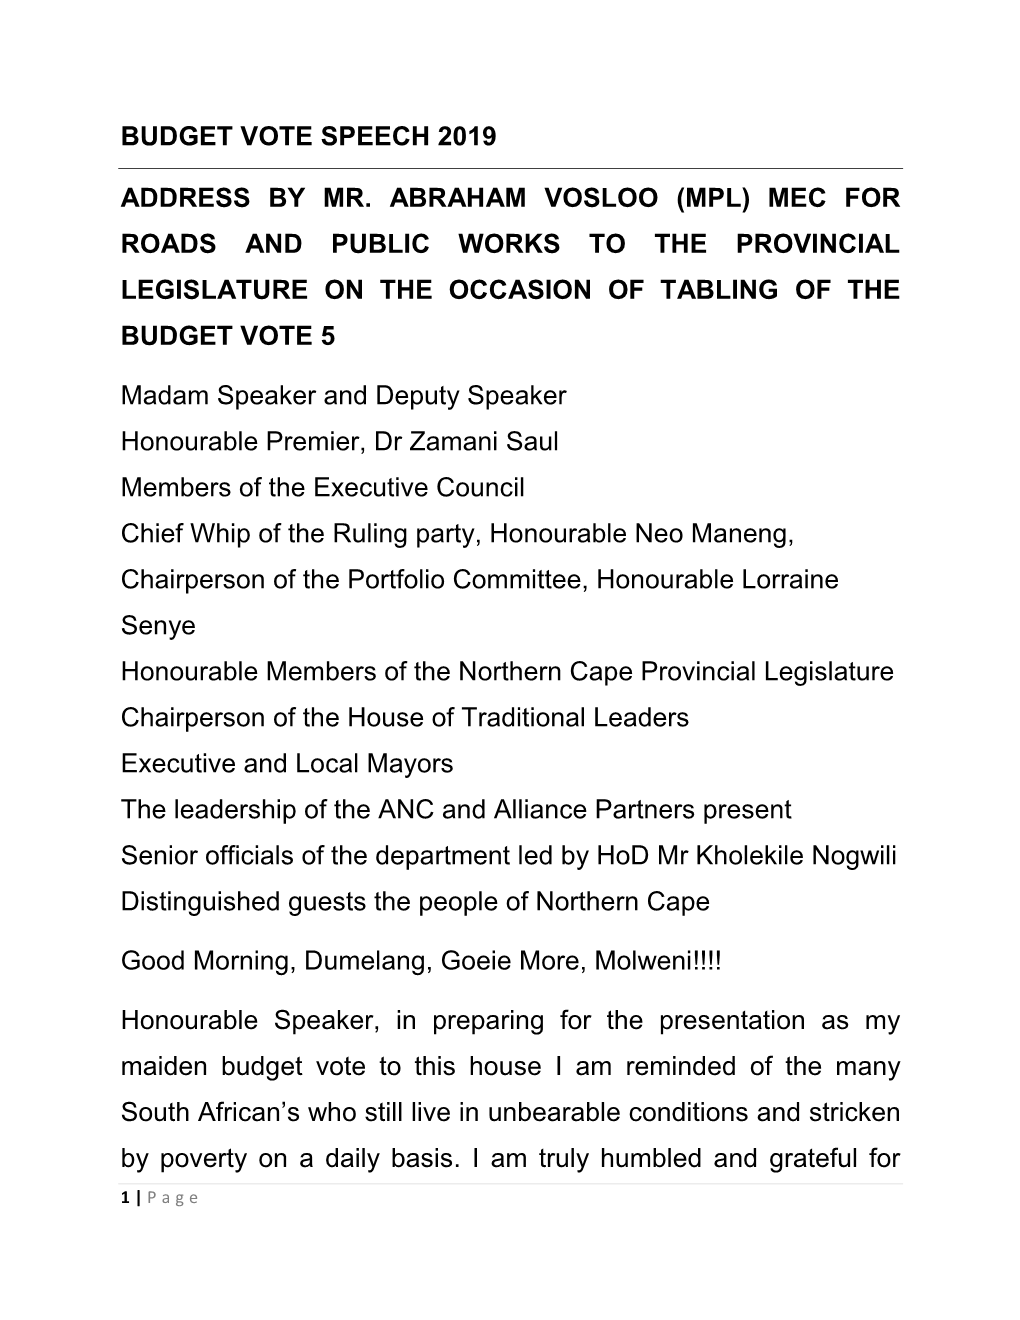 Budget Vote Speech 2019 Address by Mr. Abraham